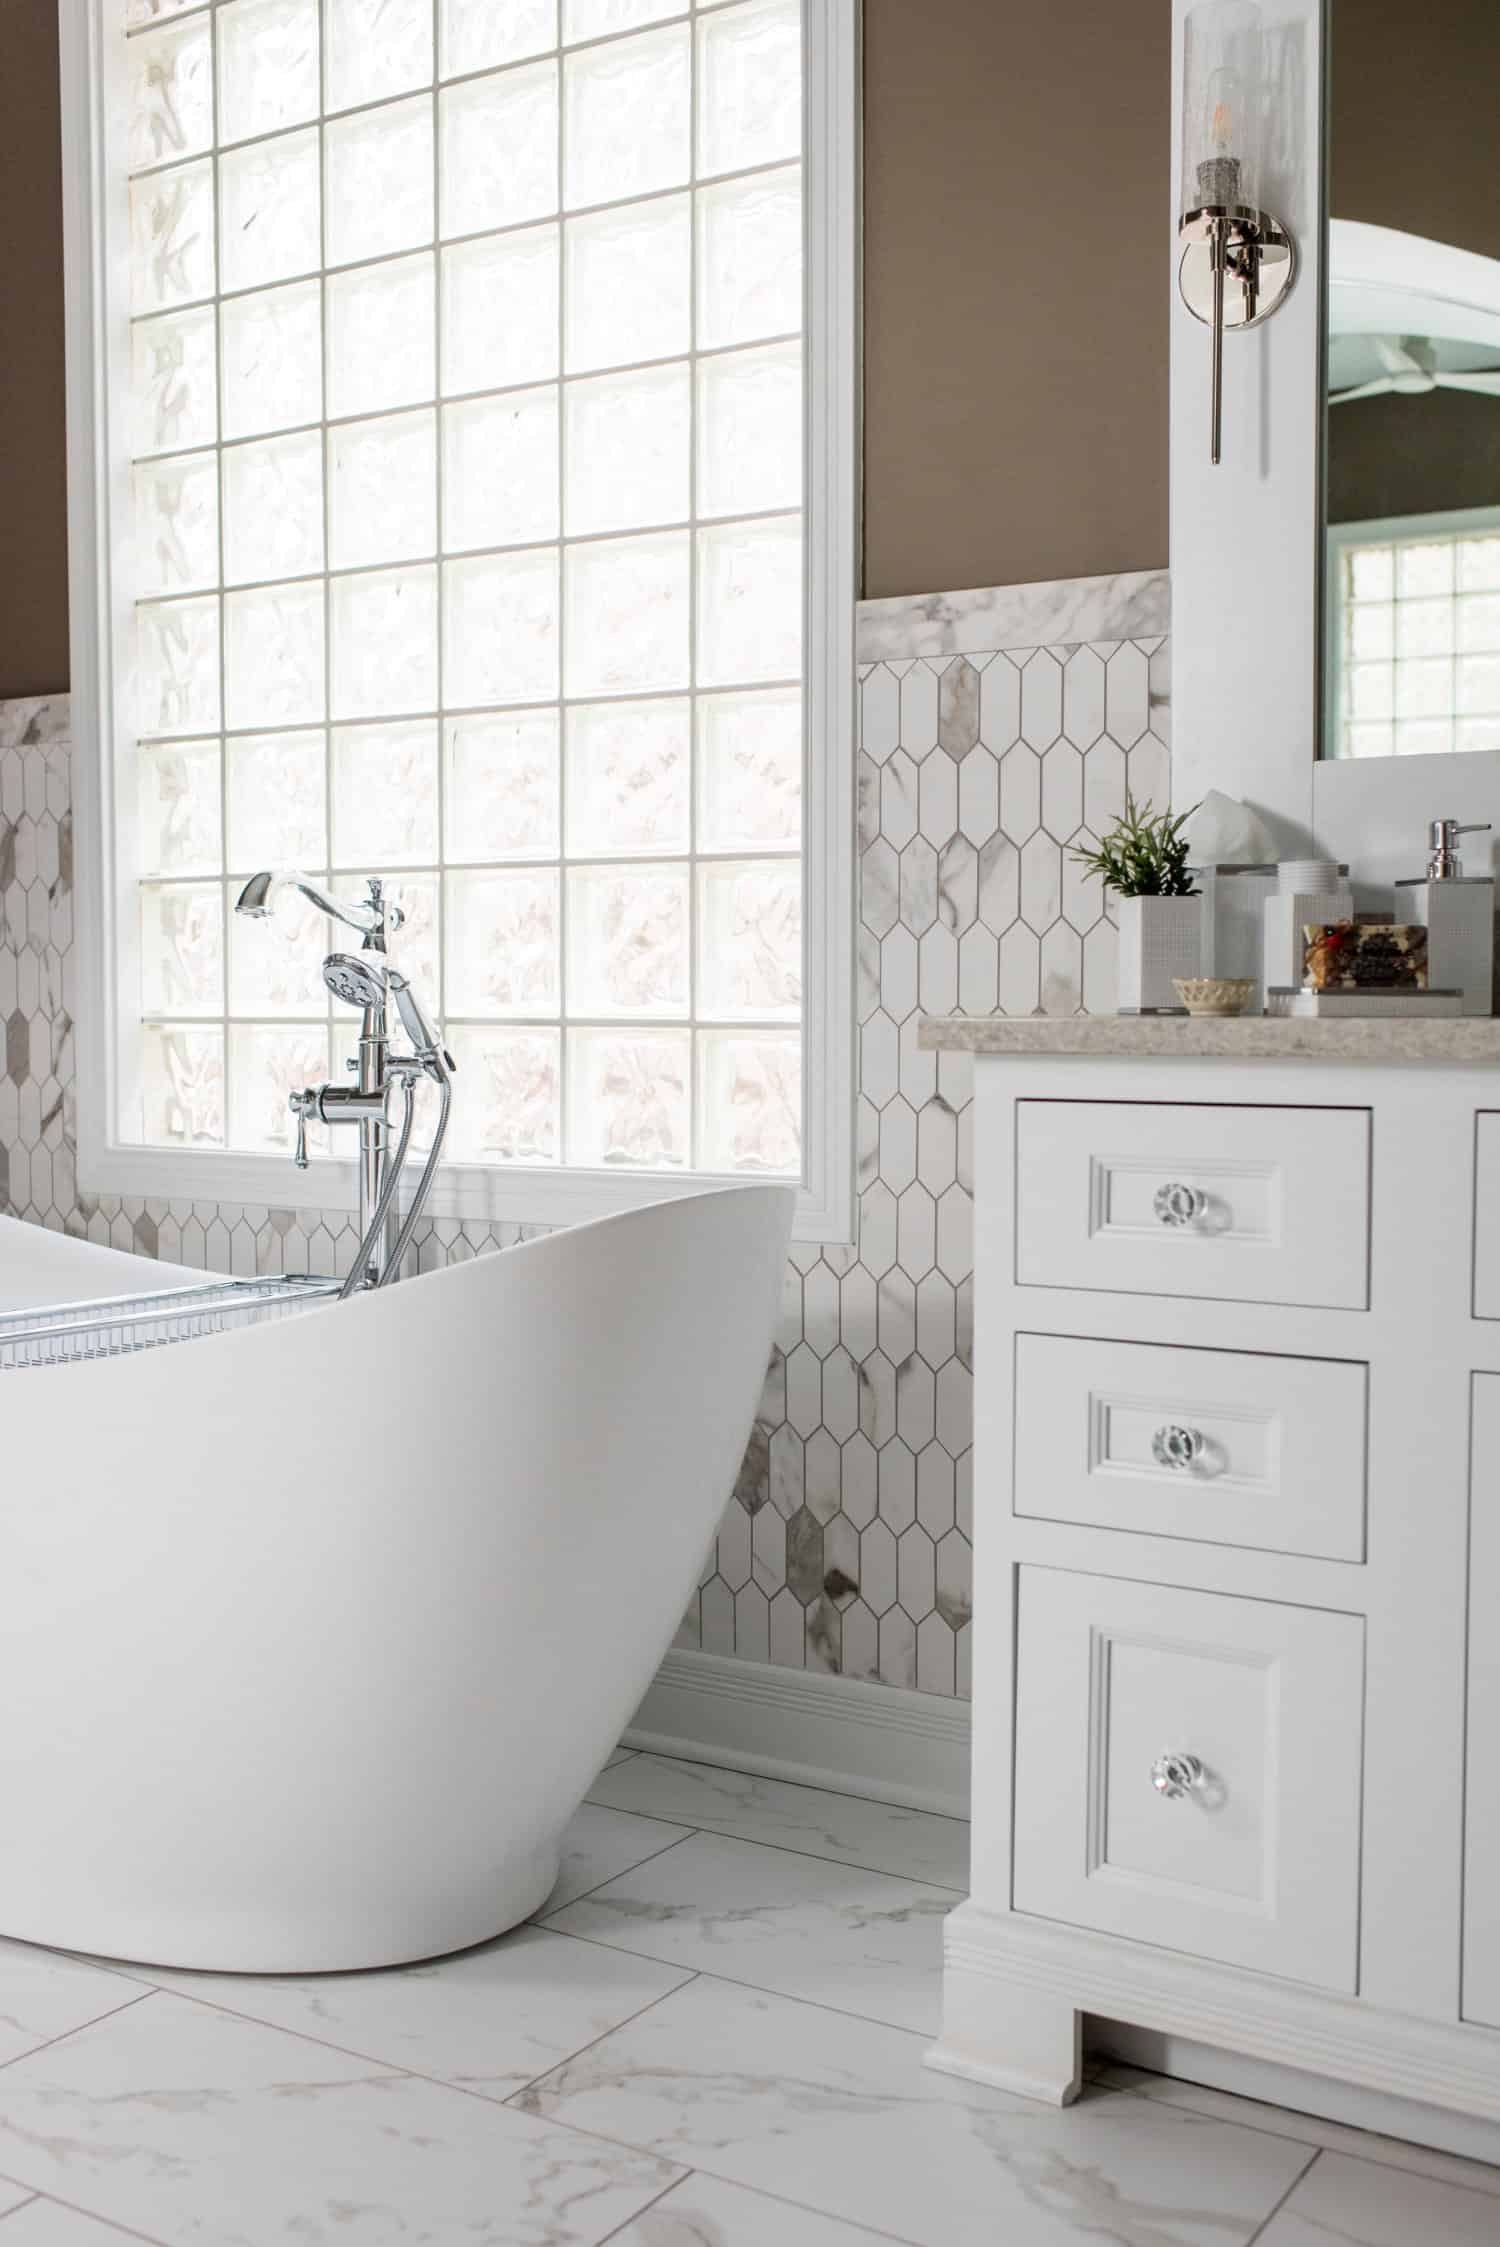 Nicholas Design Build | A white bathroom with a bathtub and sink, creating a serene oasis.